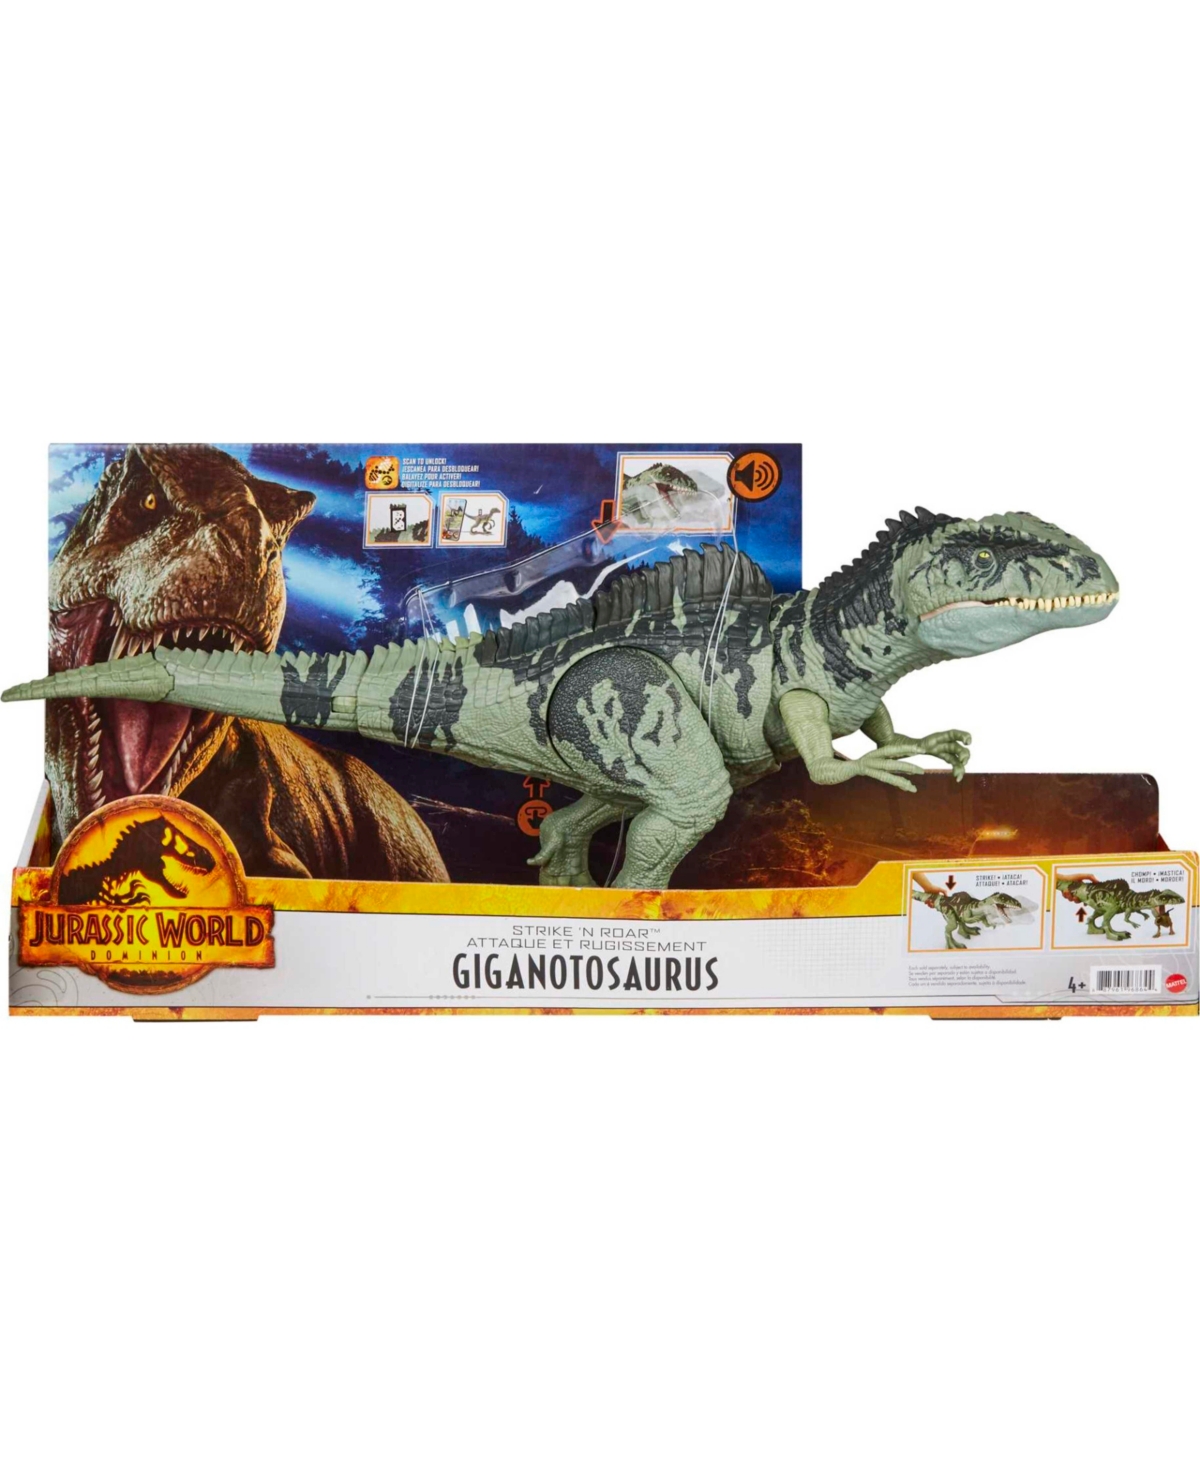 Shop Jurassic World Dominion Dinosaur Figure Strike N Roar Giganotosaurus In Multi